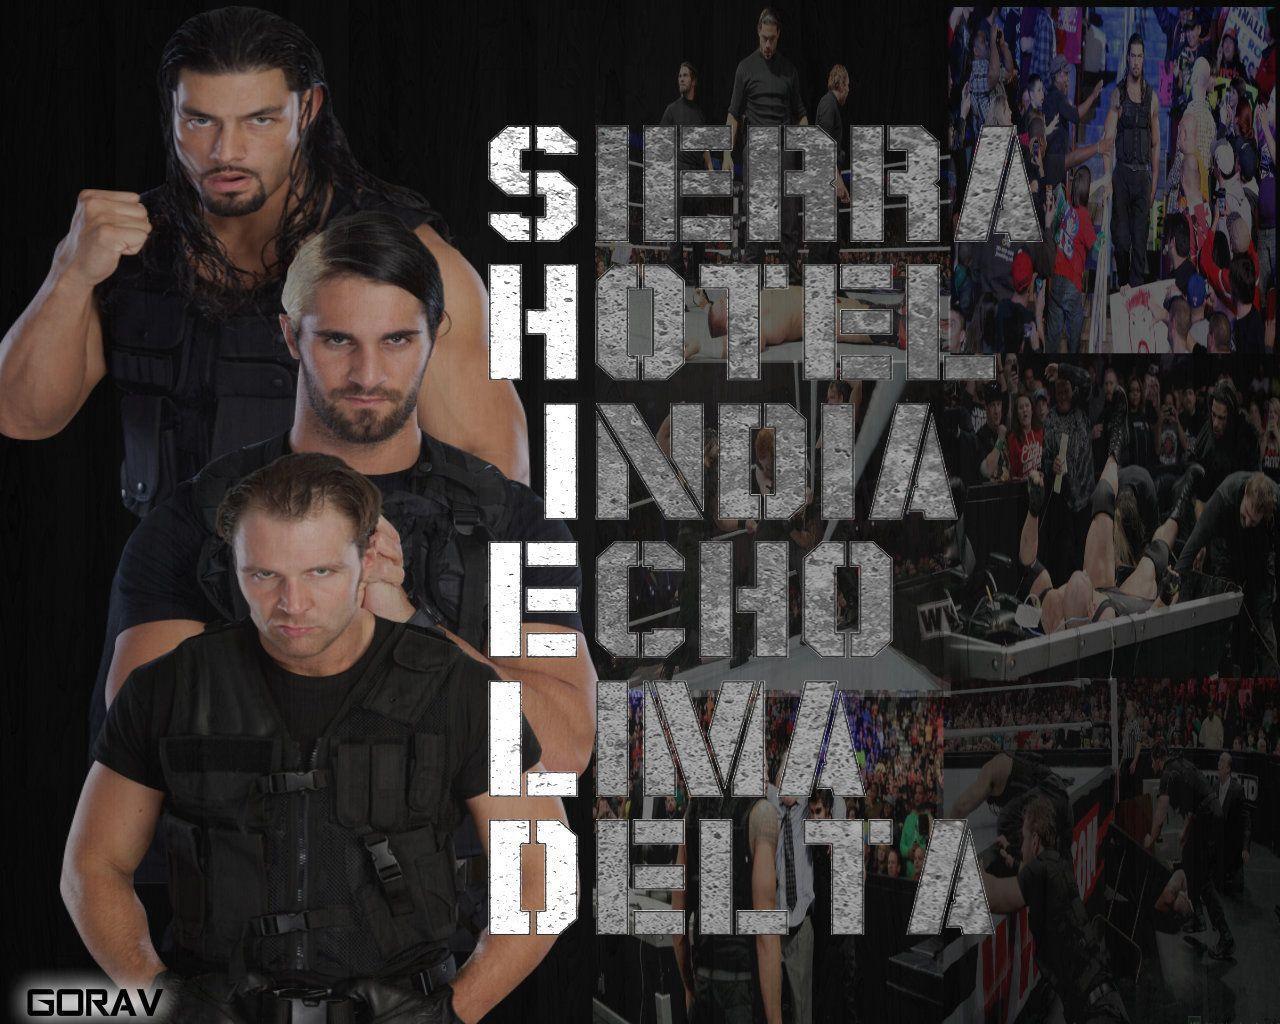 WWE The Shield Wallpaper